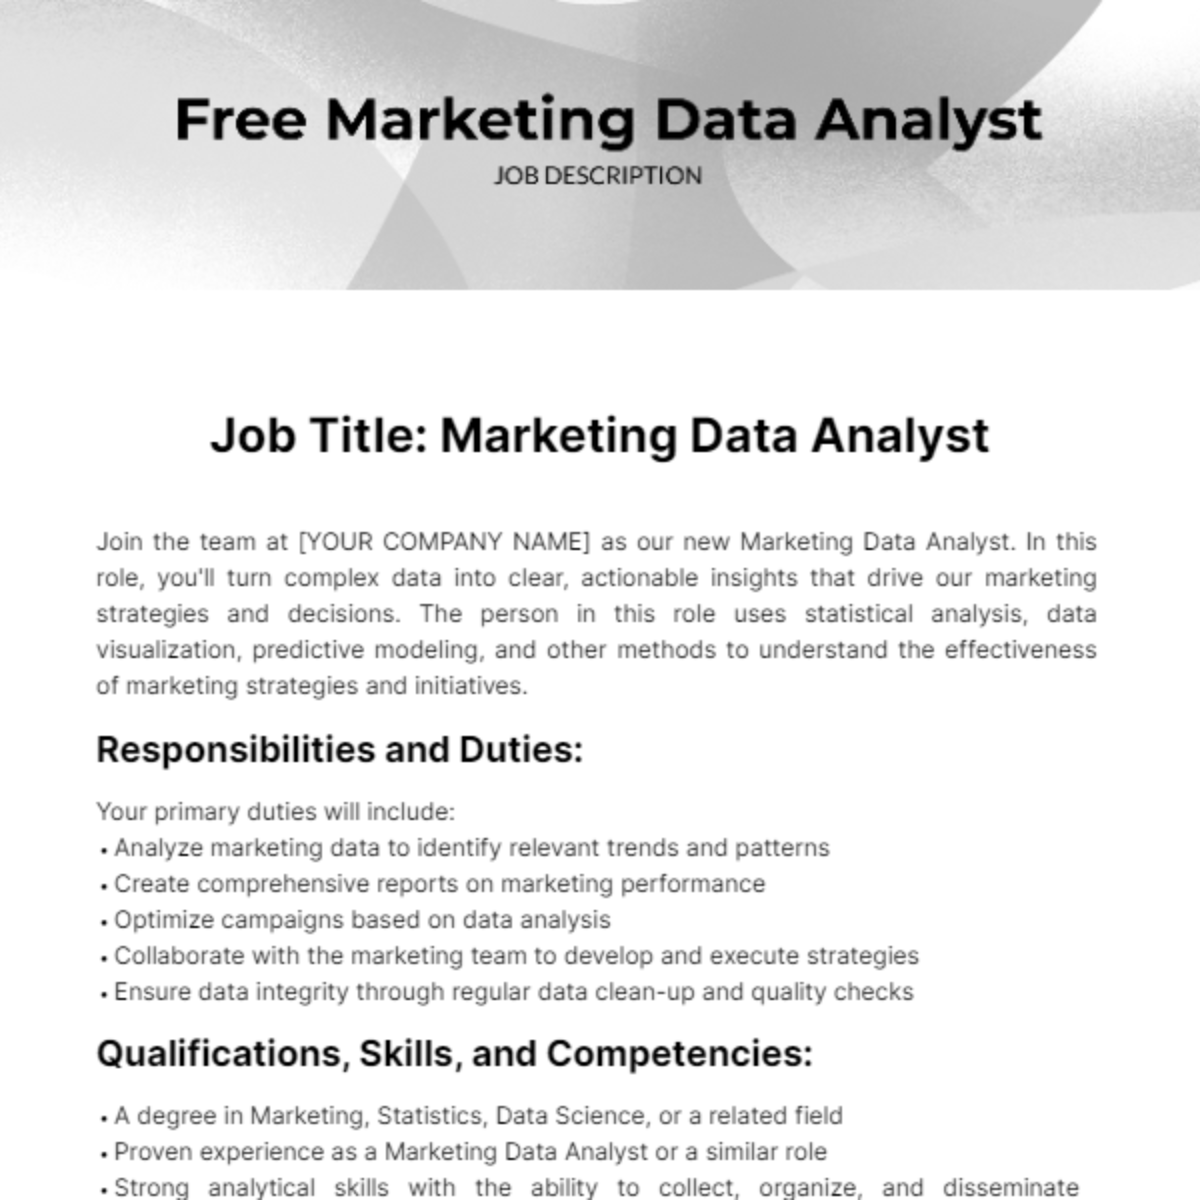 Free Marketing Data Analyst Job Description Template